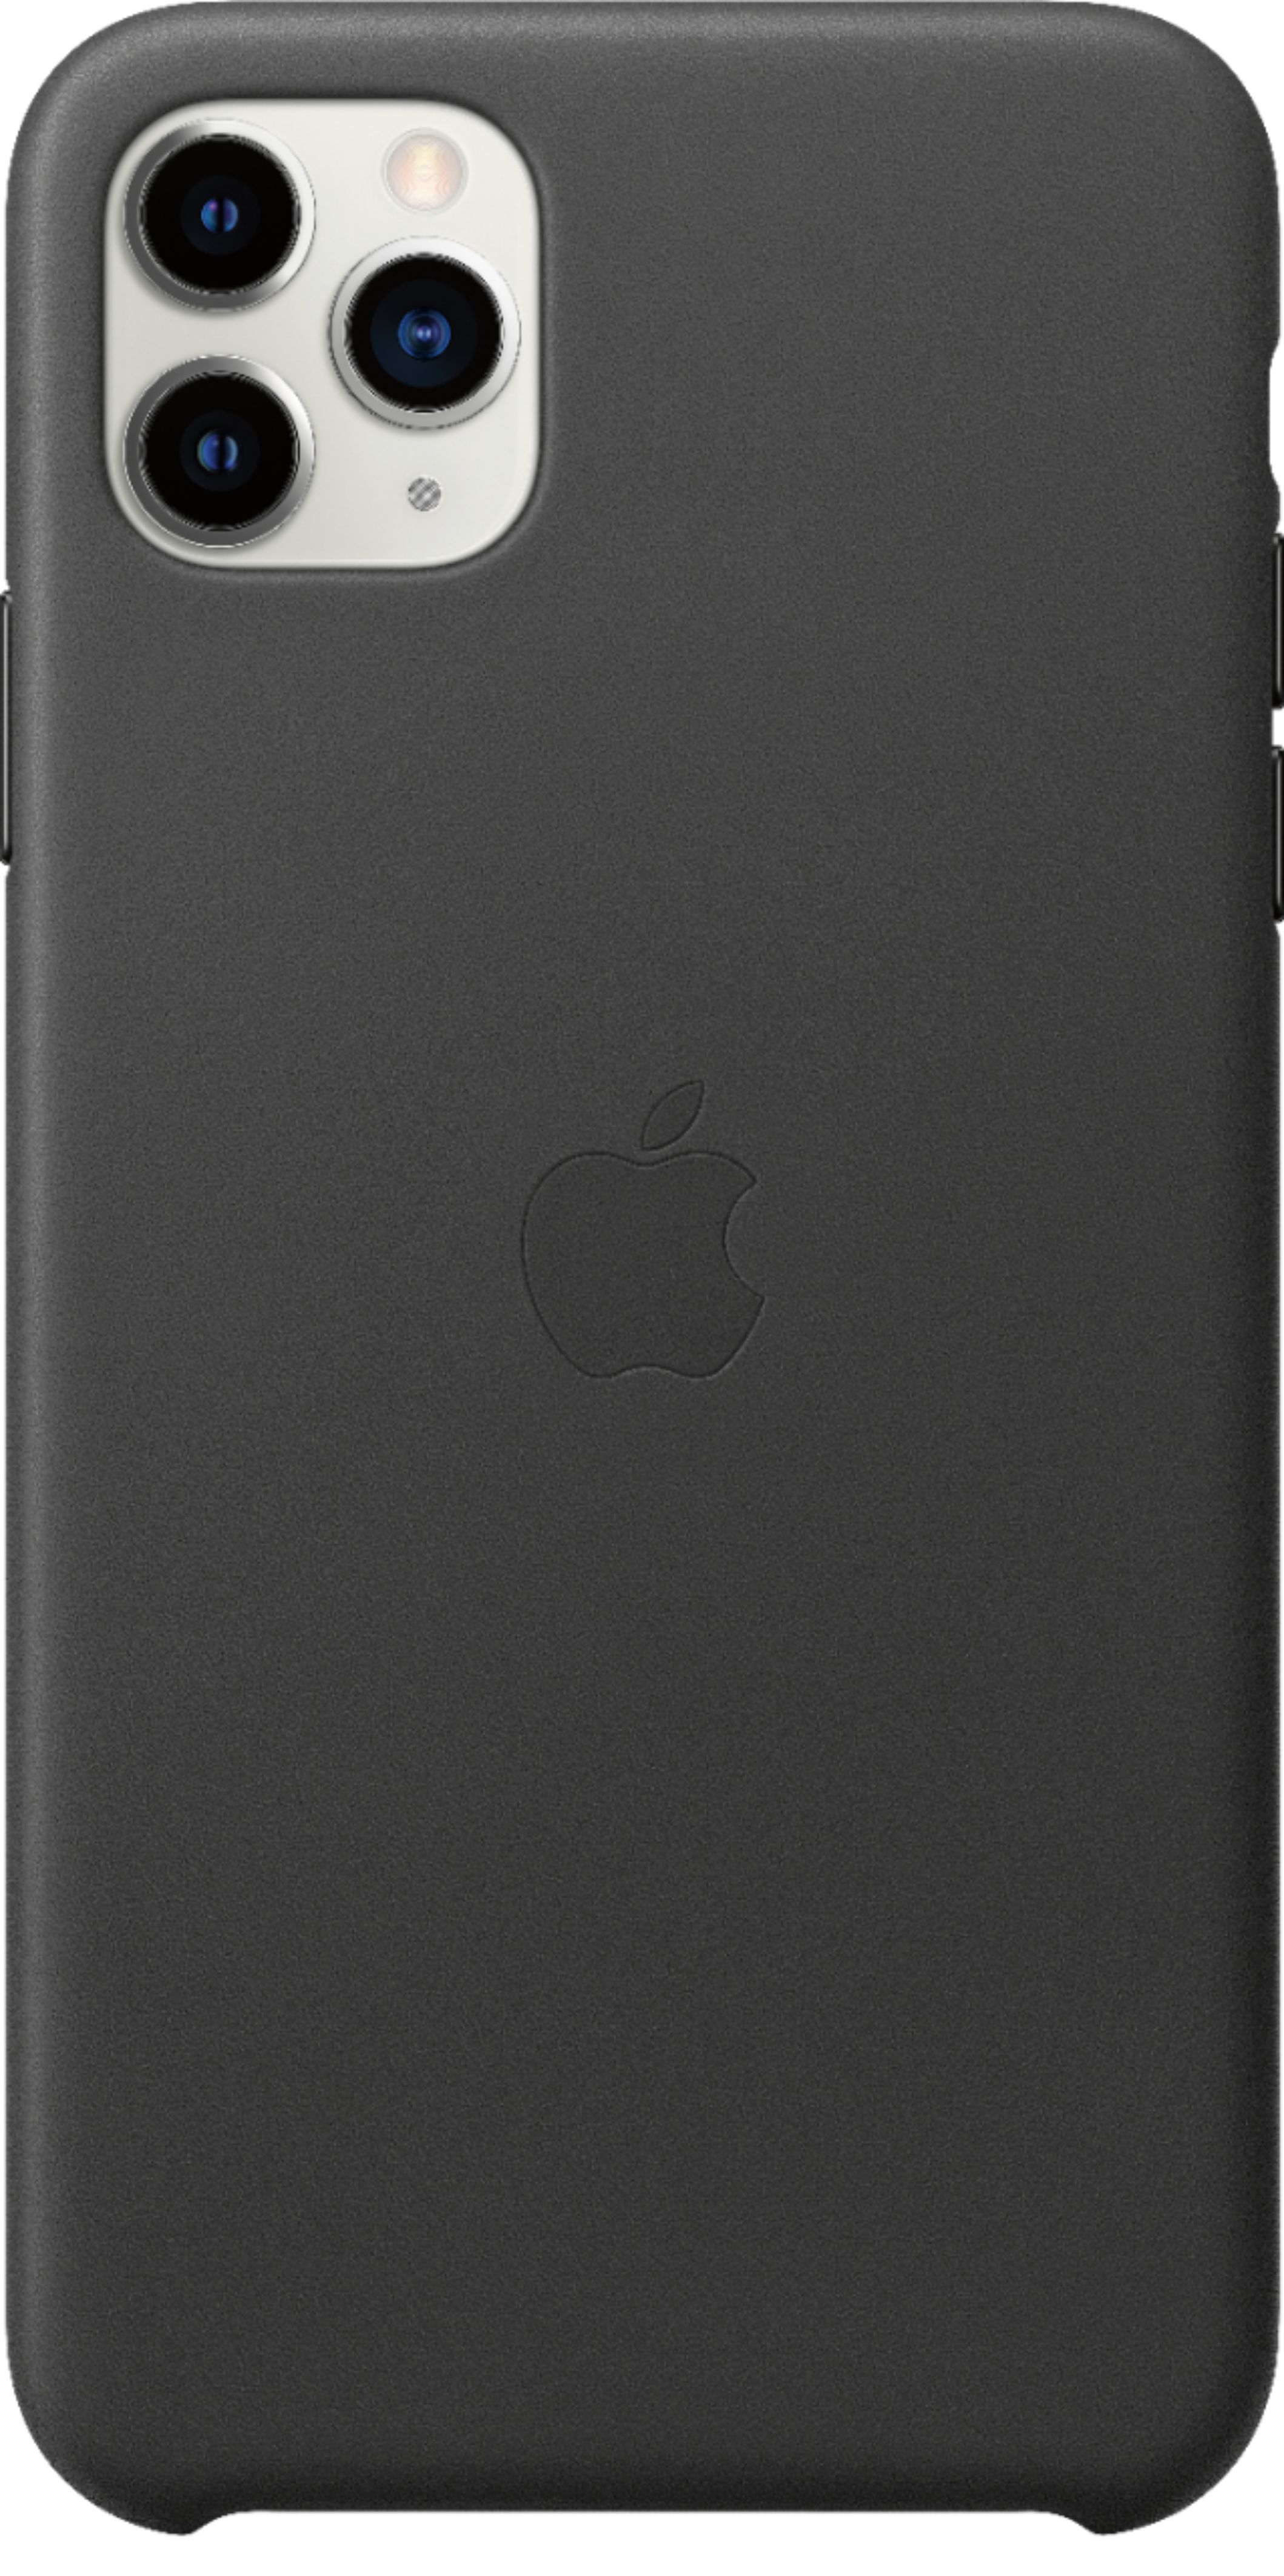 Apple Iphone 11 Pro Max Leather Case Black Mx0e2zm A Best Buy